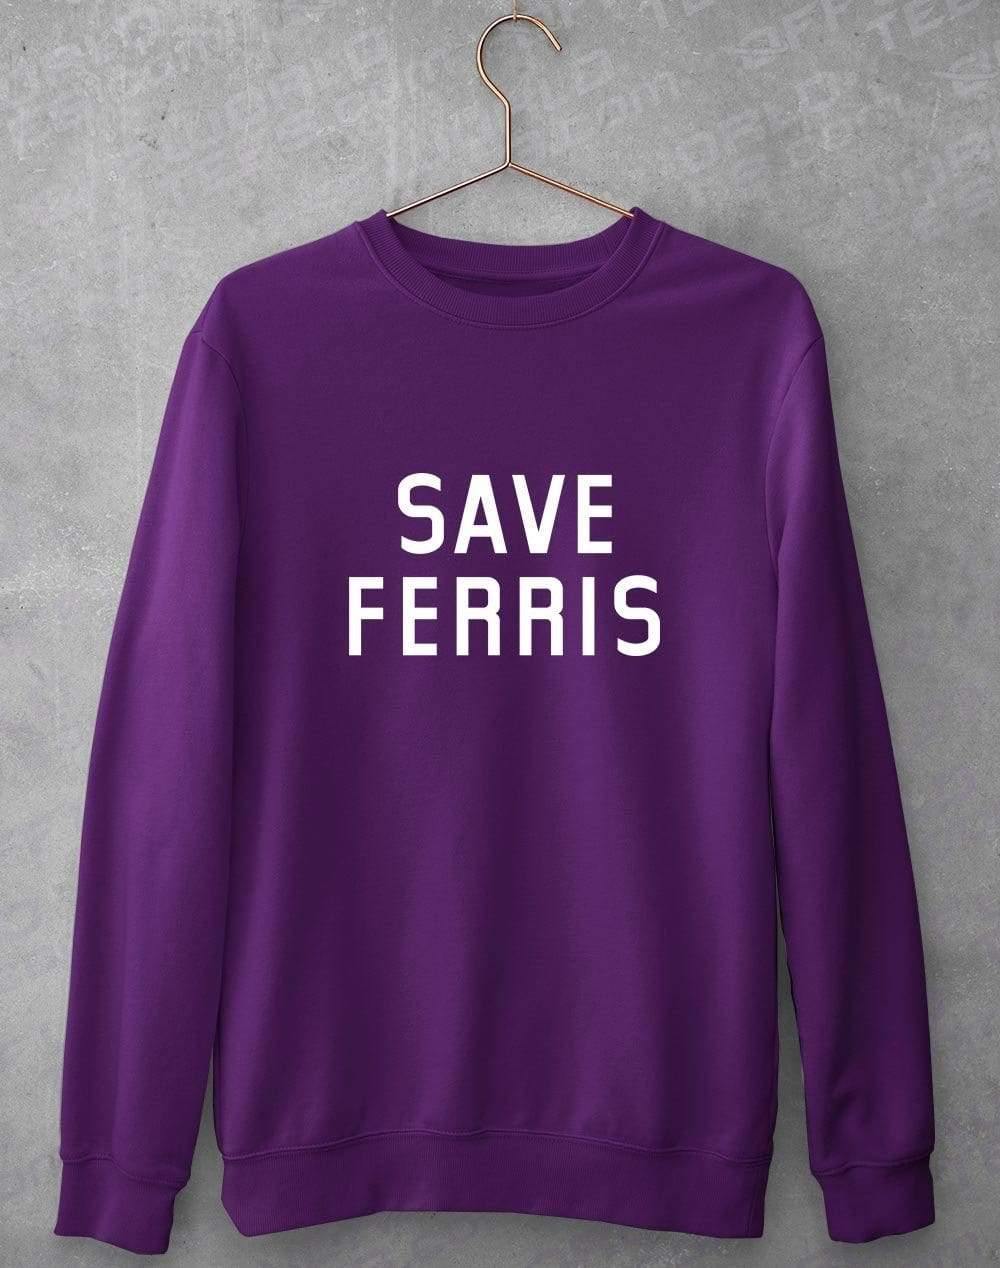 Save Ferris Sweatshirt S / Purple  - Off World Tees